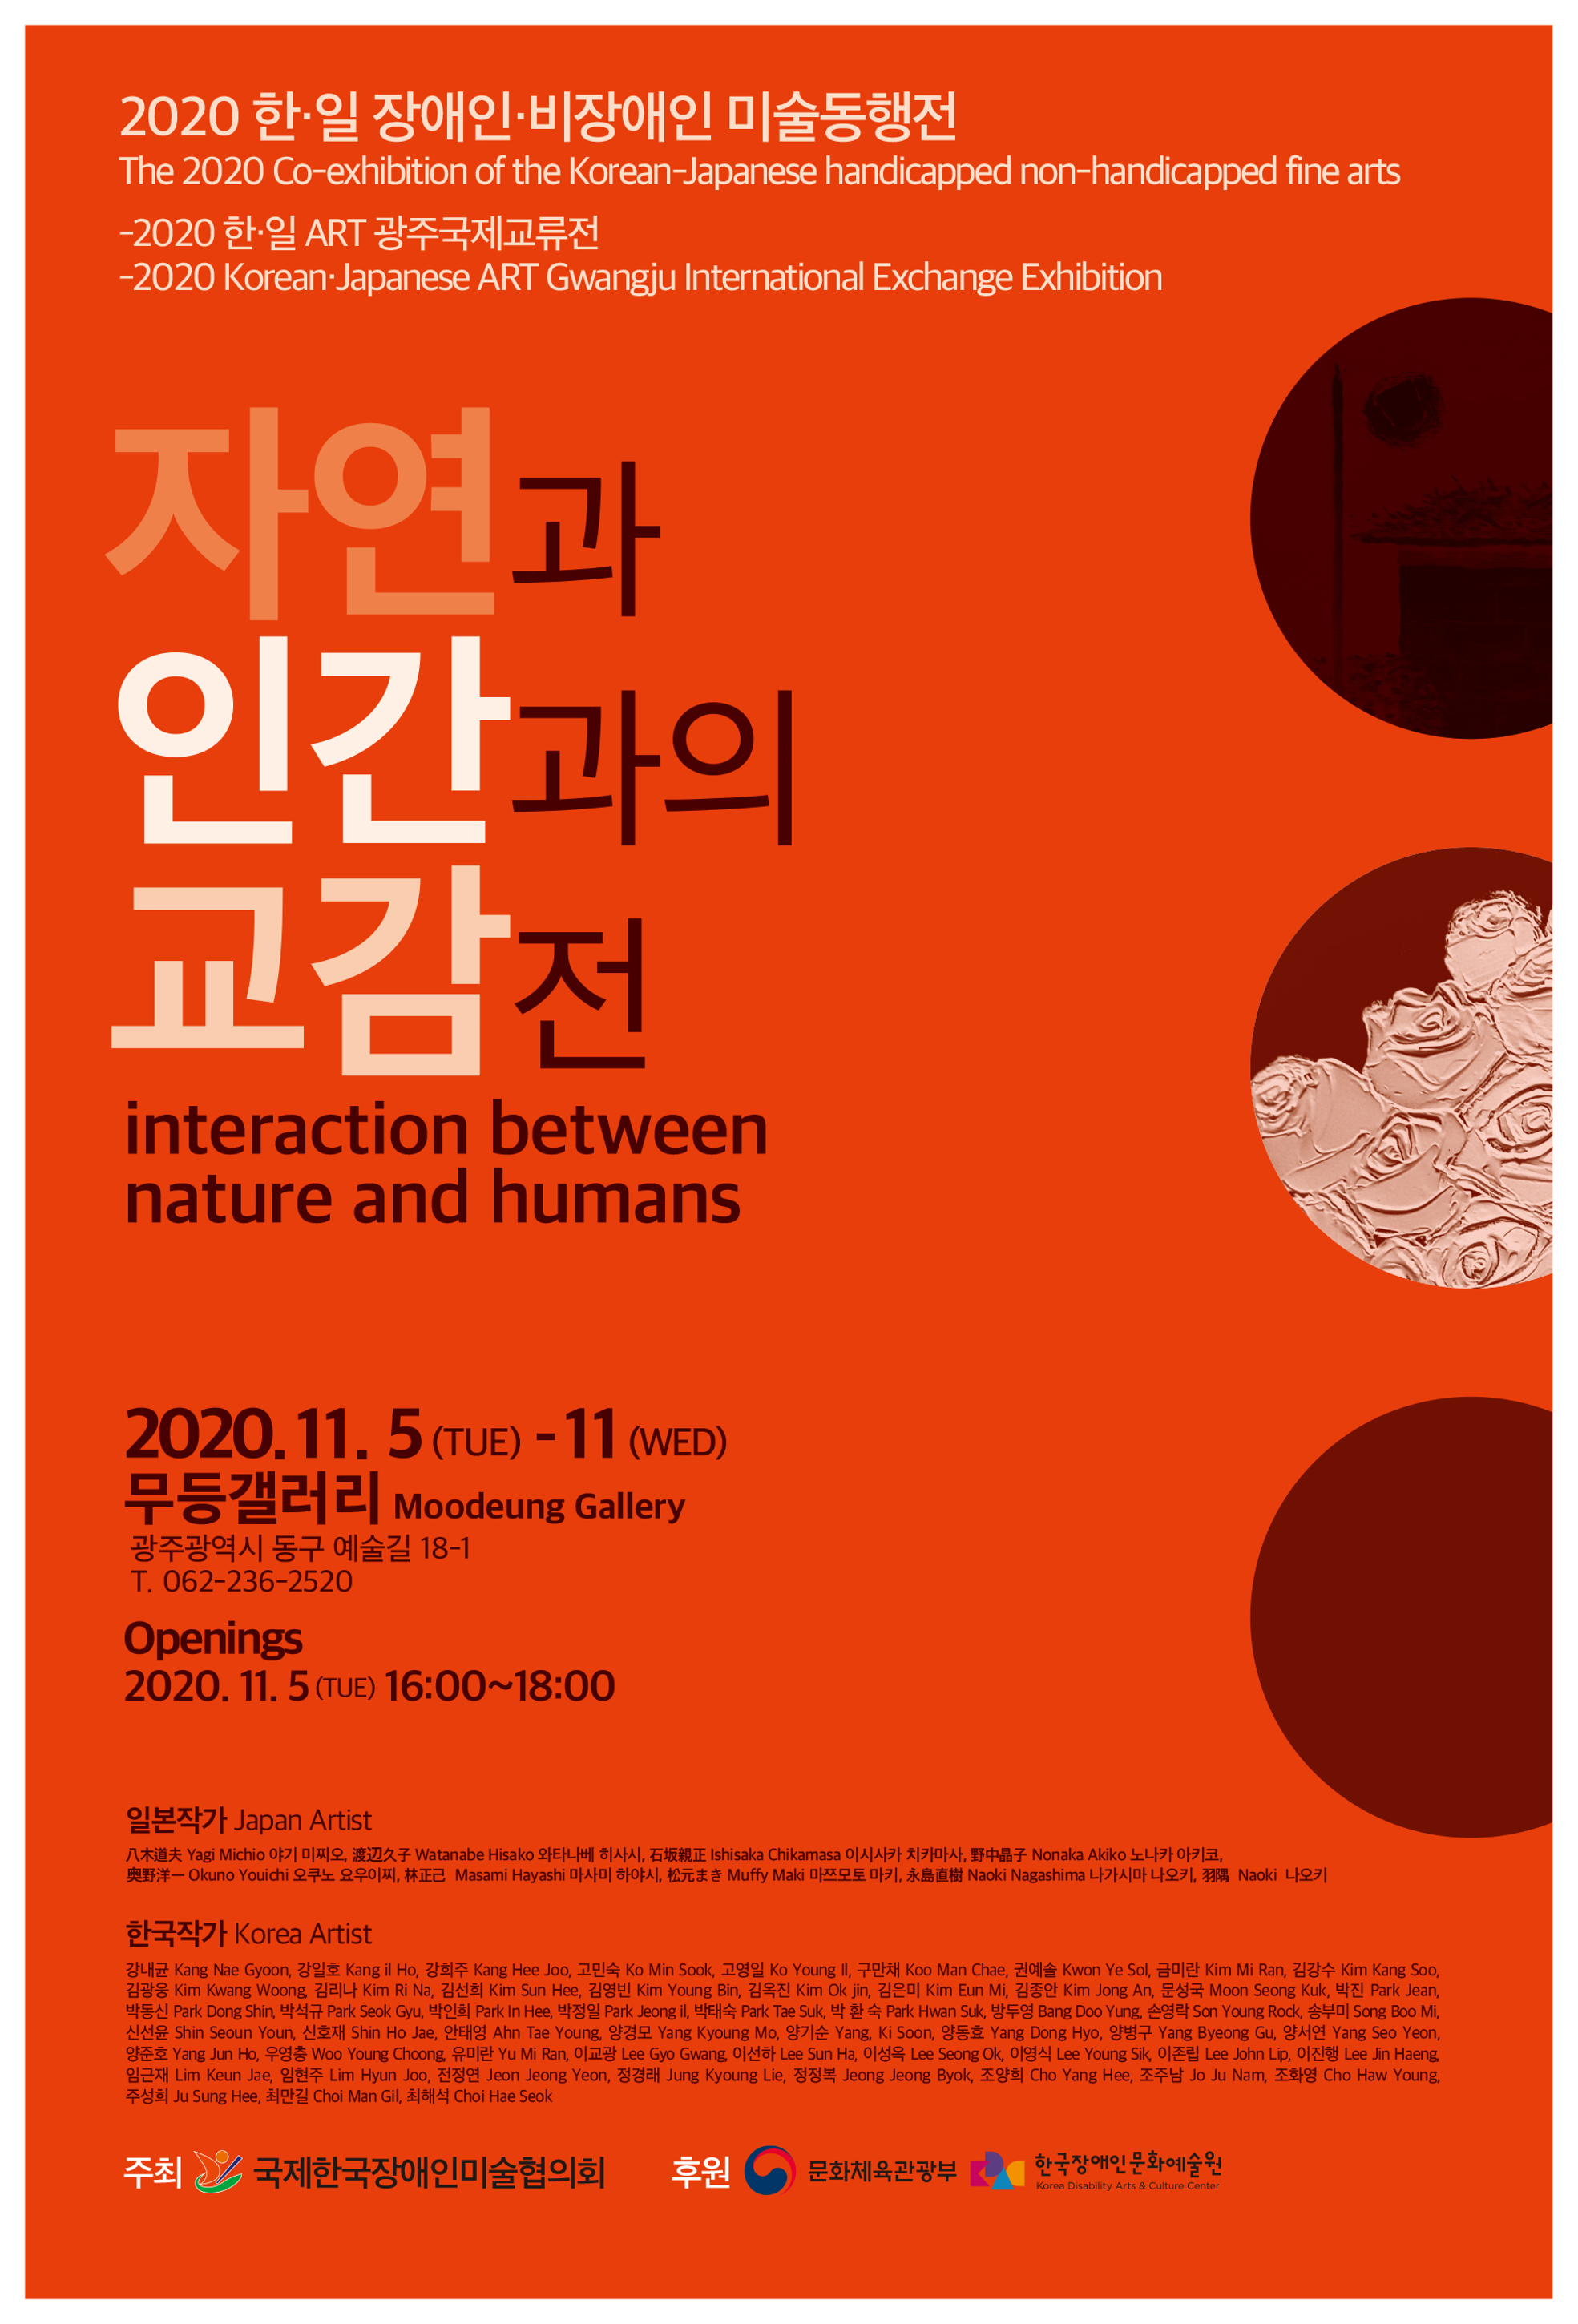 2020 한·일 장애인·비장애인 미술동행전
The 2020-Co-exhibition of the Korea-Japanese handicapped non-handicapped fine fine arts 
-2020 한·일 ART 광주국제교류전
-2020 Korea·Japanese ART Gwangju International Exchange Exhibition
자연과 인간과의 교감전 | interaction between nature and humans 
2020.11.5(TUE)-11(WED) 무등갤러리 Moodeung Gallery 광주광역시 동구 예술길 18-1 T.062-236-2520
Openings 2020.11.5(TUE) 16:00~18:00
<p>일본작가 Japan Artist | 야기 미찌오, 와타나베 히사코, 이시사카 치카마사, 노나카 아키코, 오쿠노 요우이찌, 마사미 하야시, 마쯔모토 마키, 나오키 나가시마, 히로하루 하스미</p>
<p>한국작가 Korea Artist | 강내균, 강일호, 강희주, 고영일, 고민숙, 구만채, 곽수봉, 권예솔, 금미란, 김강수, 김광웅, 김리나, 김선희, 김영빈, 김옥진, 김은미, 김종안, 문성국, 박동신, 박석규, 박인희, 박정일, 박 진, 박태숙, 박환숙, 방두영, 손영락, 송부미, 신선윤, 신호재, 안태영, 양경모, 양기순, 양동효, 양병구, 양서연, 양준호, 우영충, 유미란, 이교광, 이선하, 이성옥, 이영식, 이존립, 이진행, 임근재, 임현주, 전정연, 정경래, 정정복, 조양희, 조주남, 조화영, 주성희, 최만길, 최해석</p>
주최 국제한국장애인미술협의회, 후원 문화체육관광부, 한국장애인문화예술원